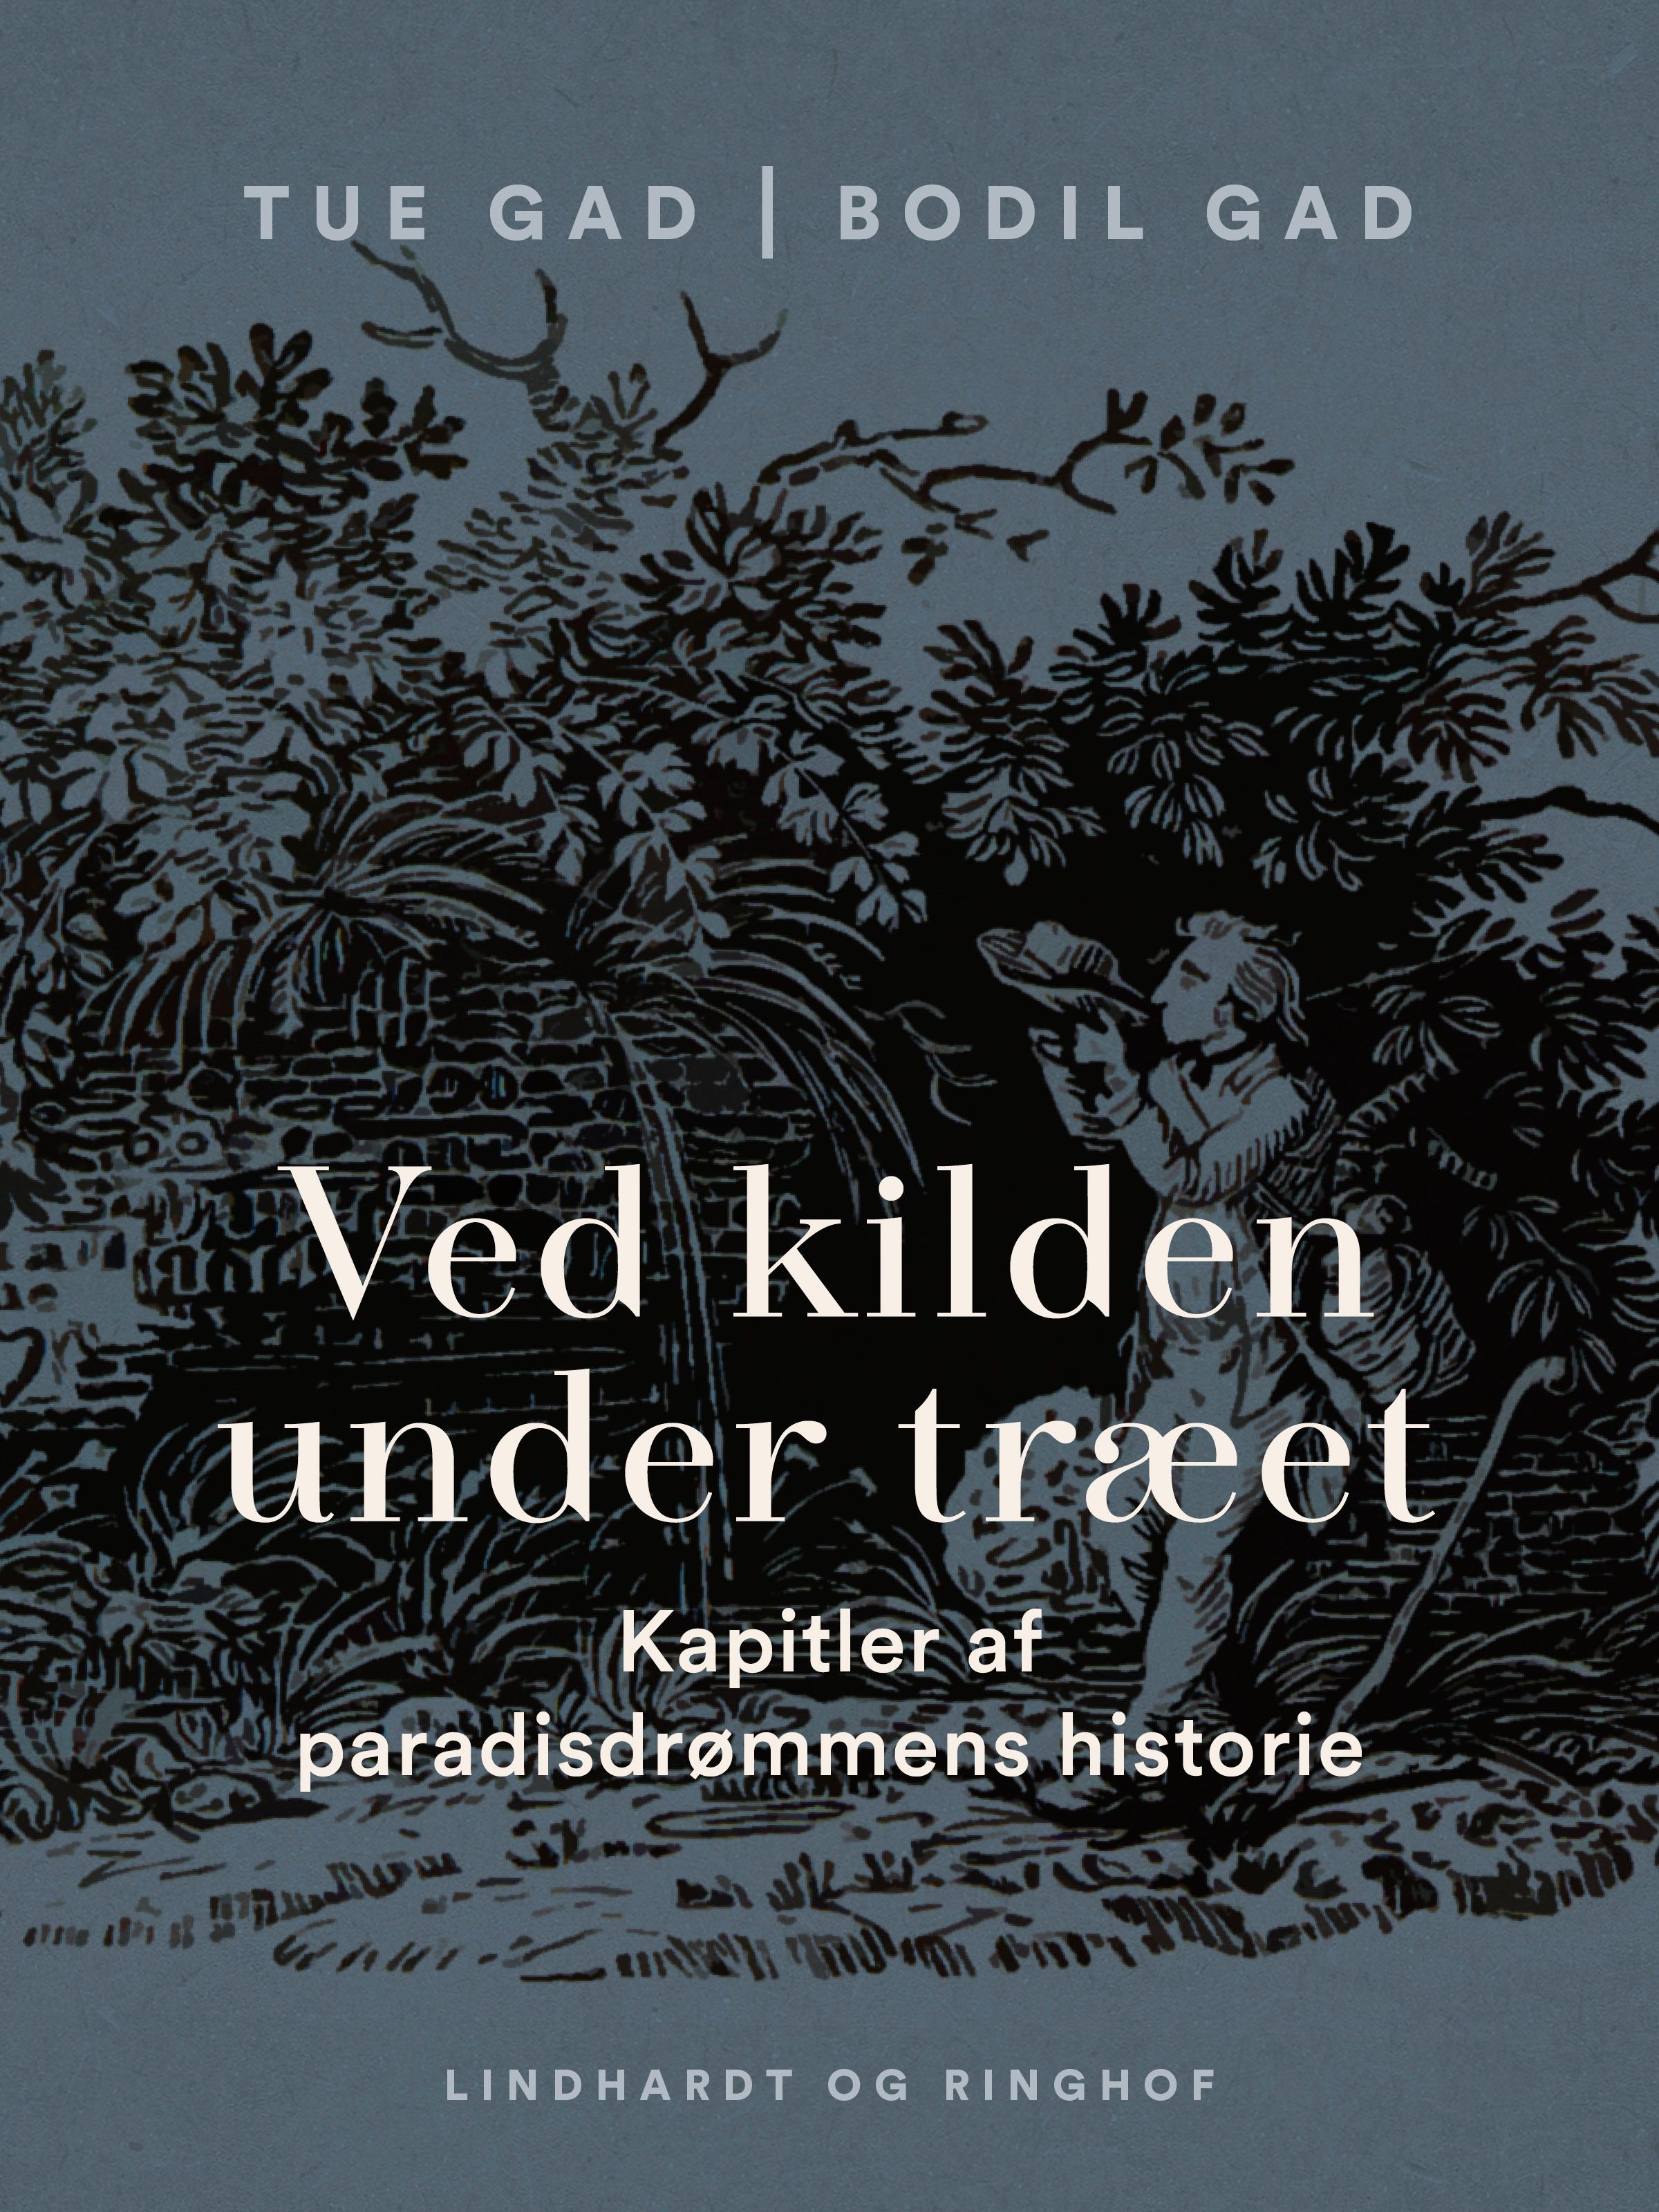 Ved kilden under træet. Kapitler af paradisdrømmens historie, e-bok av Bodil Gad, Tue Gad